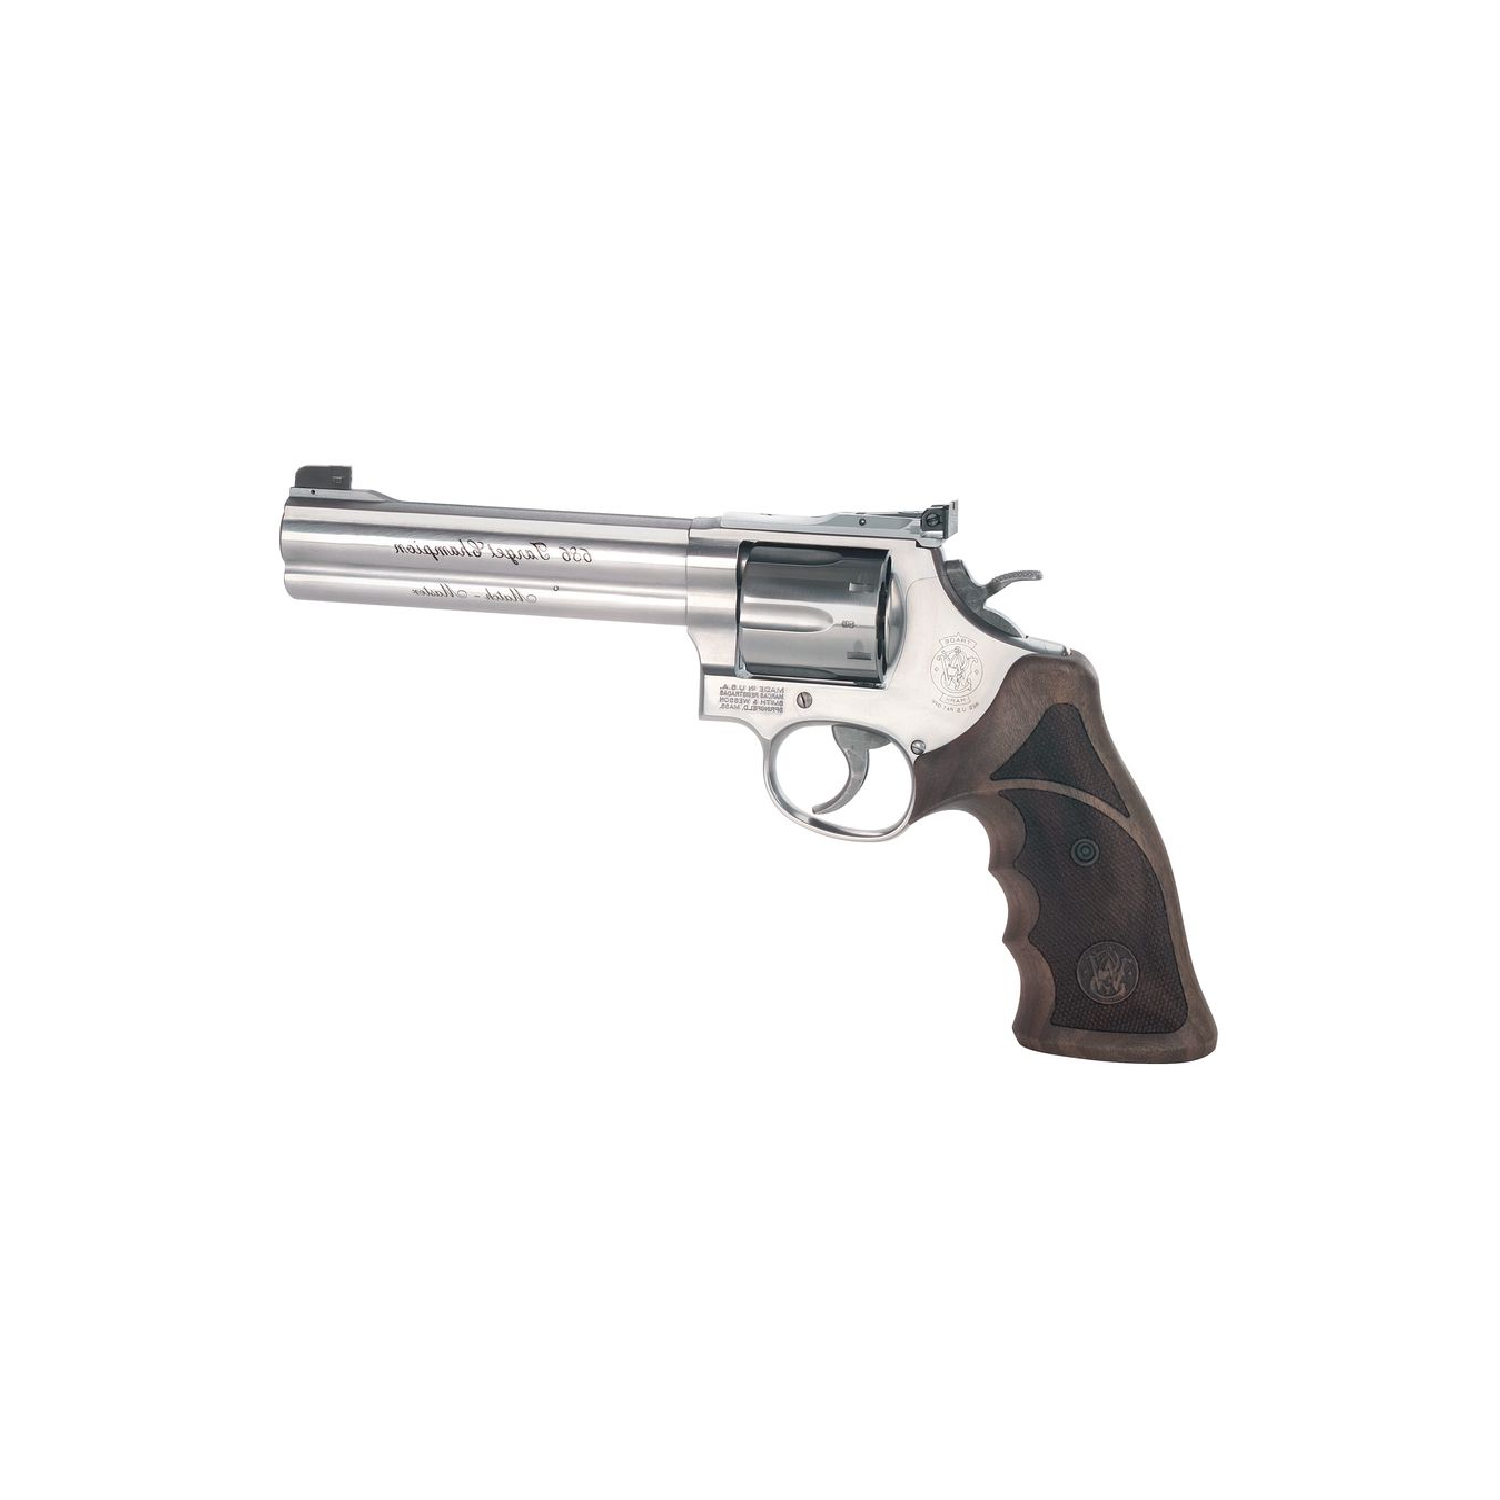 Smith & Wesson Mod. 686 Target Champion Match Master, .357 Magnum